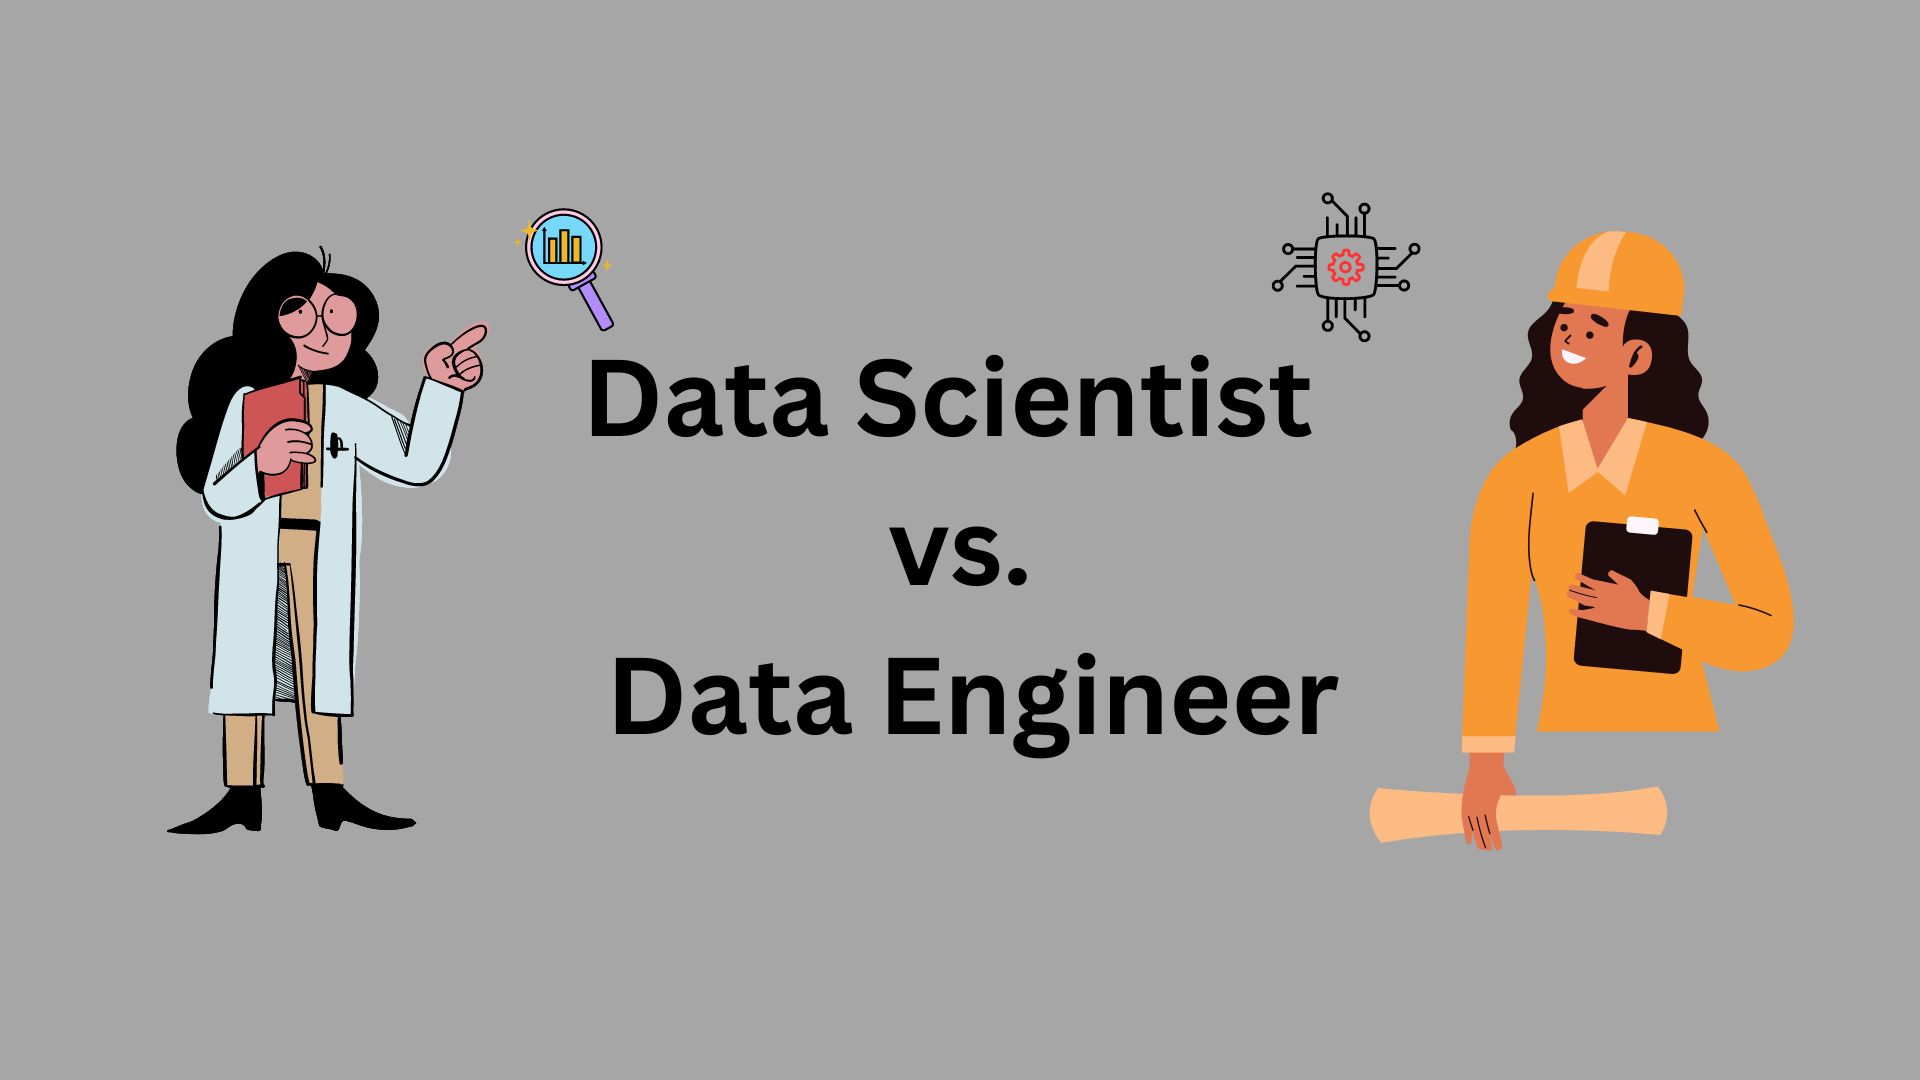 Data Scientist vs. Data Engineer primedata primedata.org